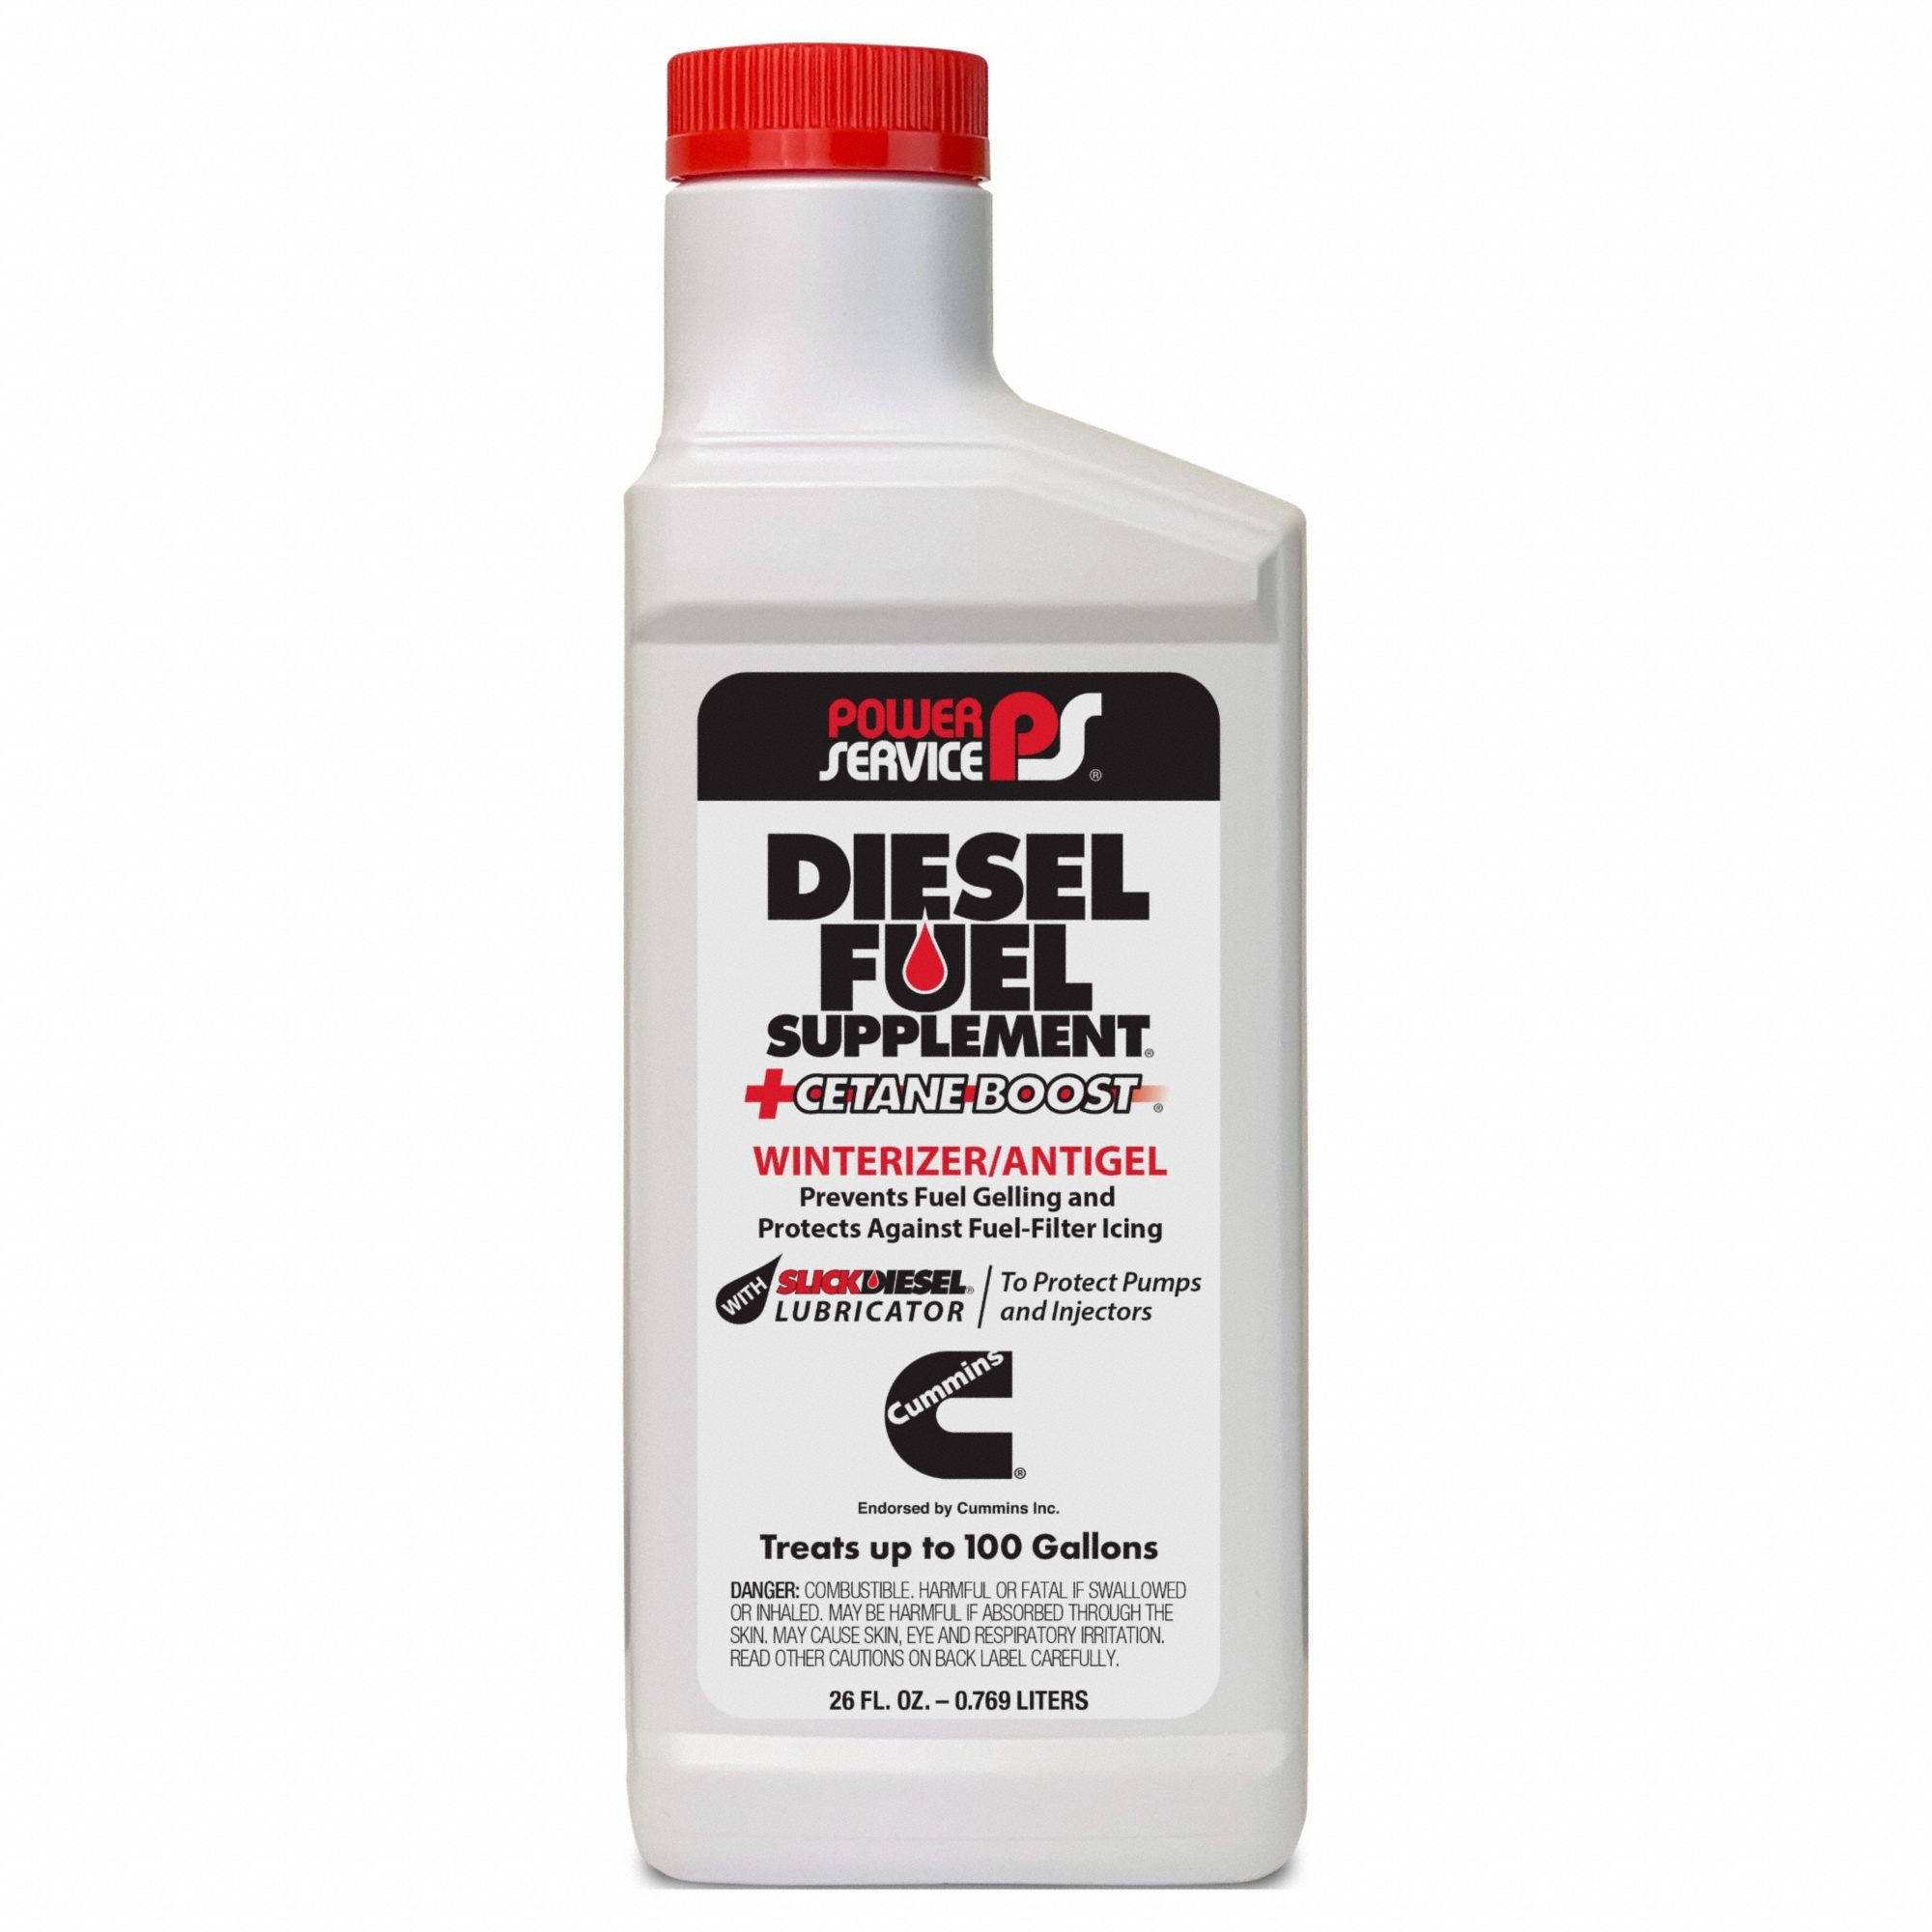 Diesel Fuel Supplement Plus Cetane Boost: Diesel Fuel Additive, Cetane, Brown